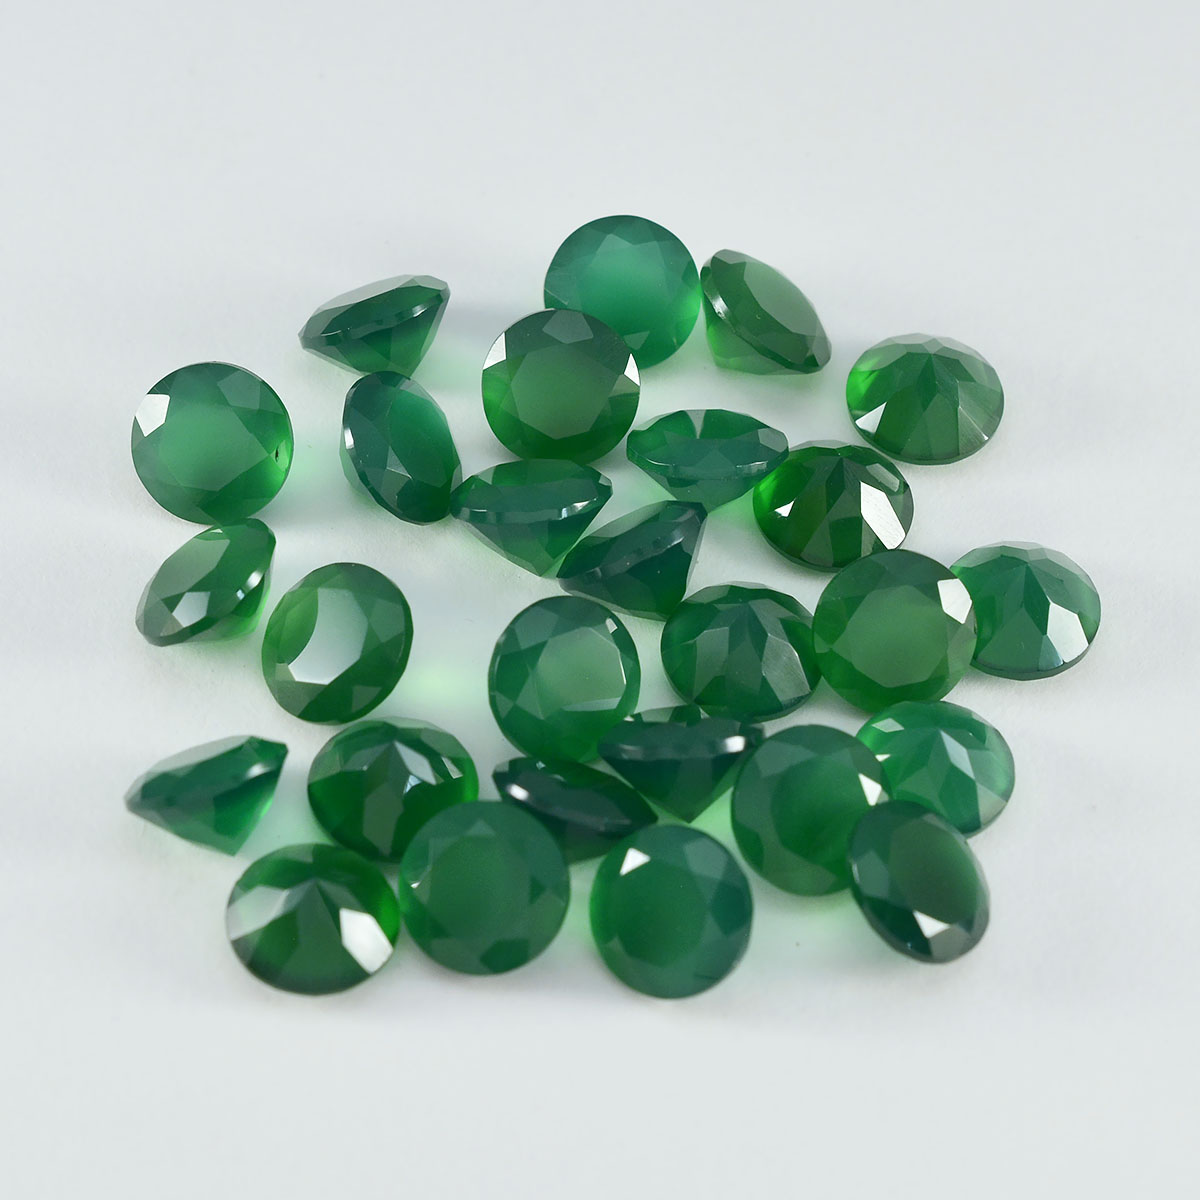 Riyogems 1PC Genuine Green Onyx Faceted 4x4 mm Round Shape A+1 Quality Loose Gemstone